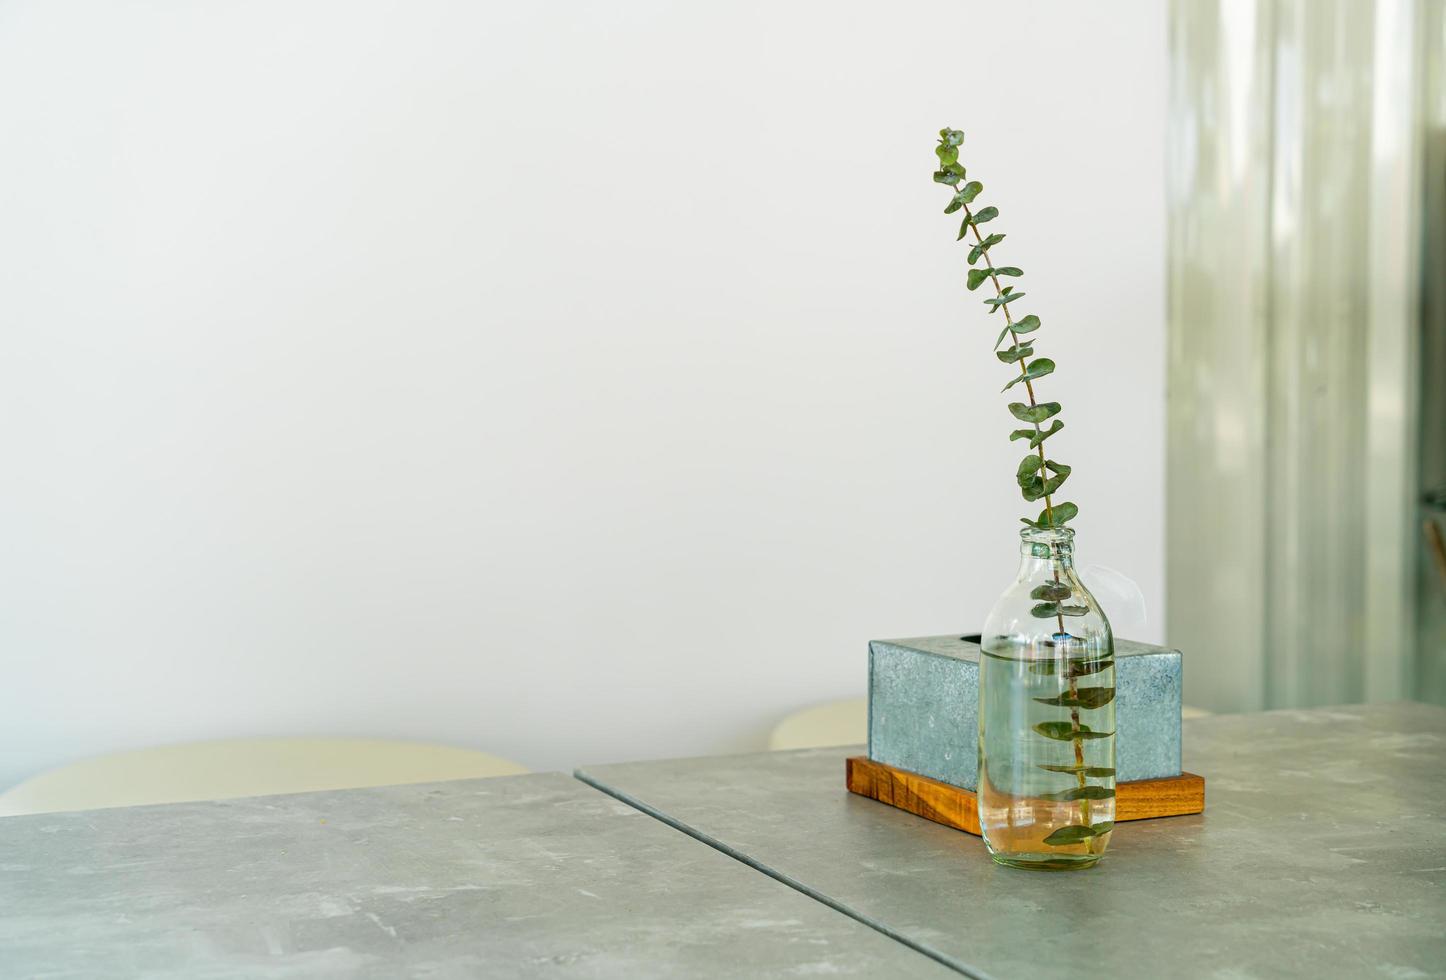 planta na decoração do vaso na mesa da sala foto